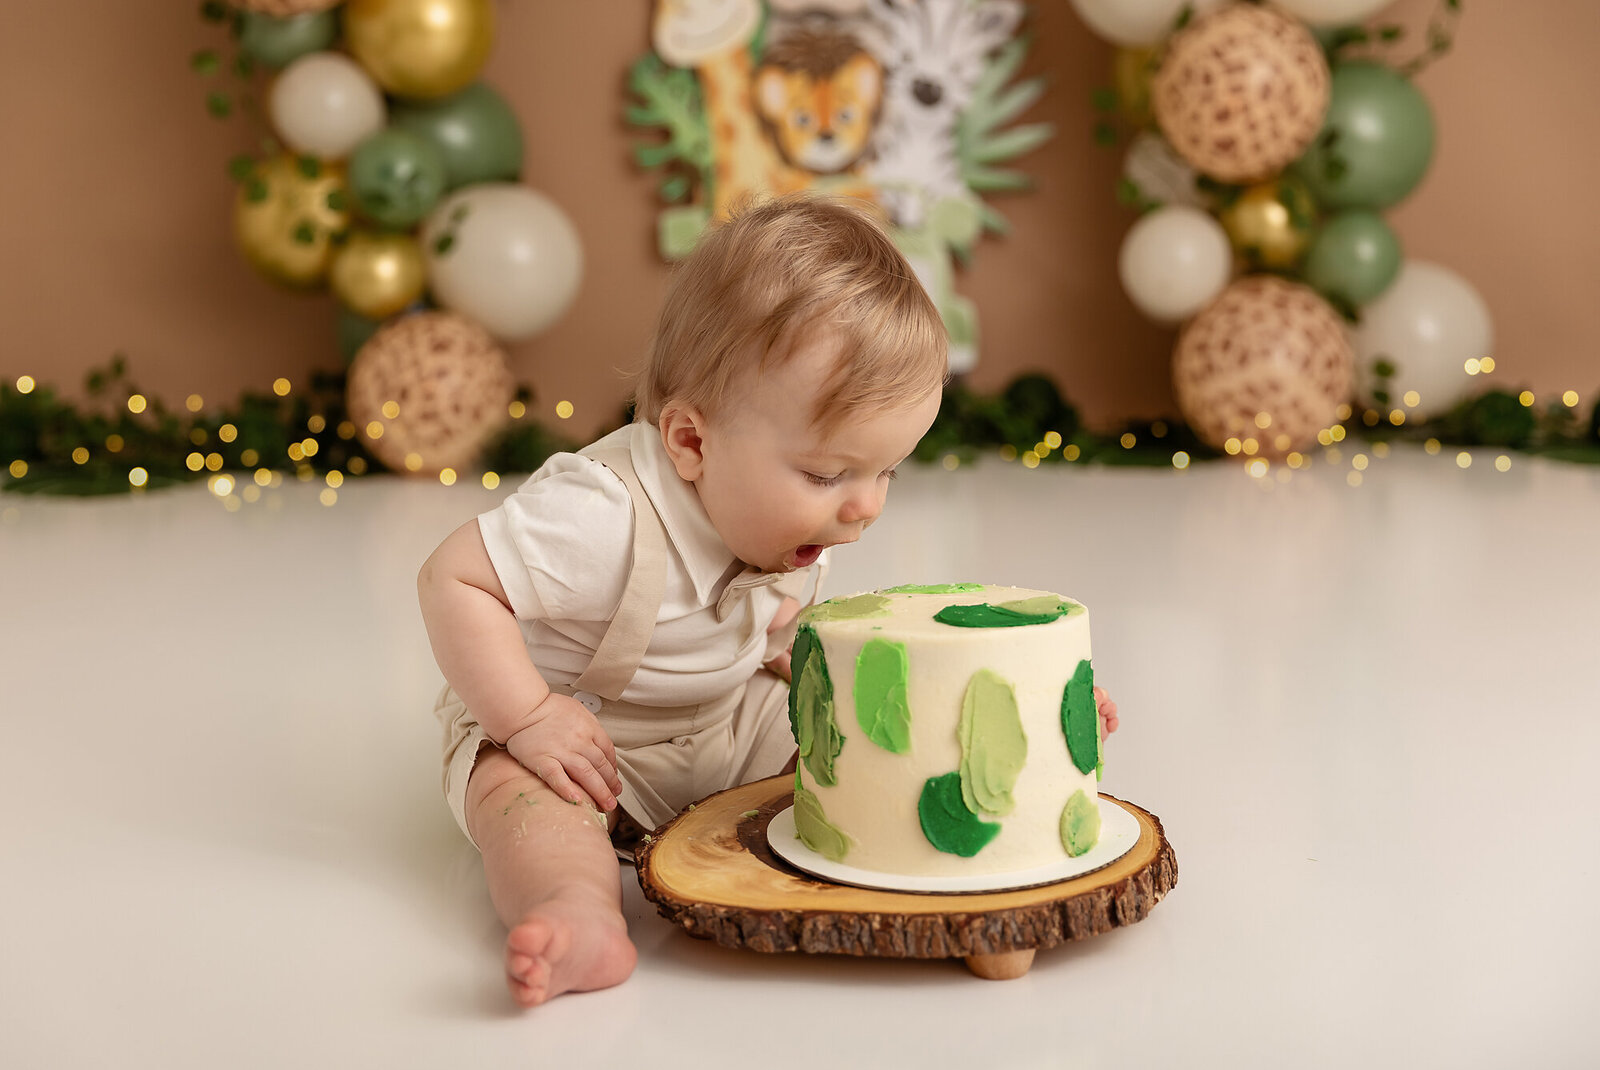 baby about to eat cake in birthday photos by milestone photographer new philadelphia